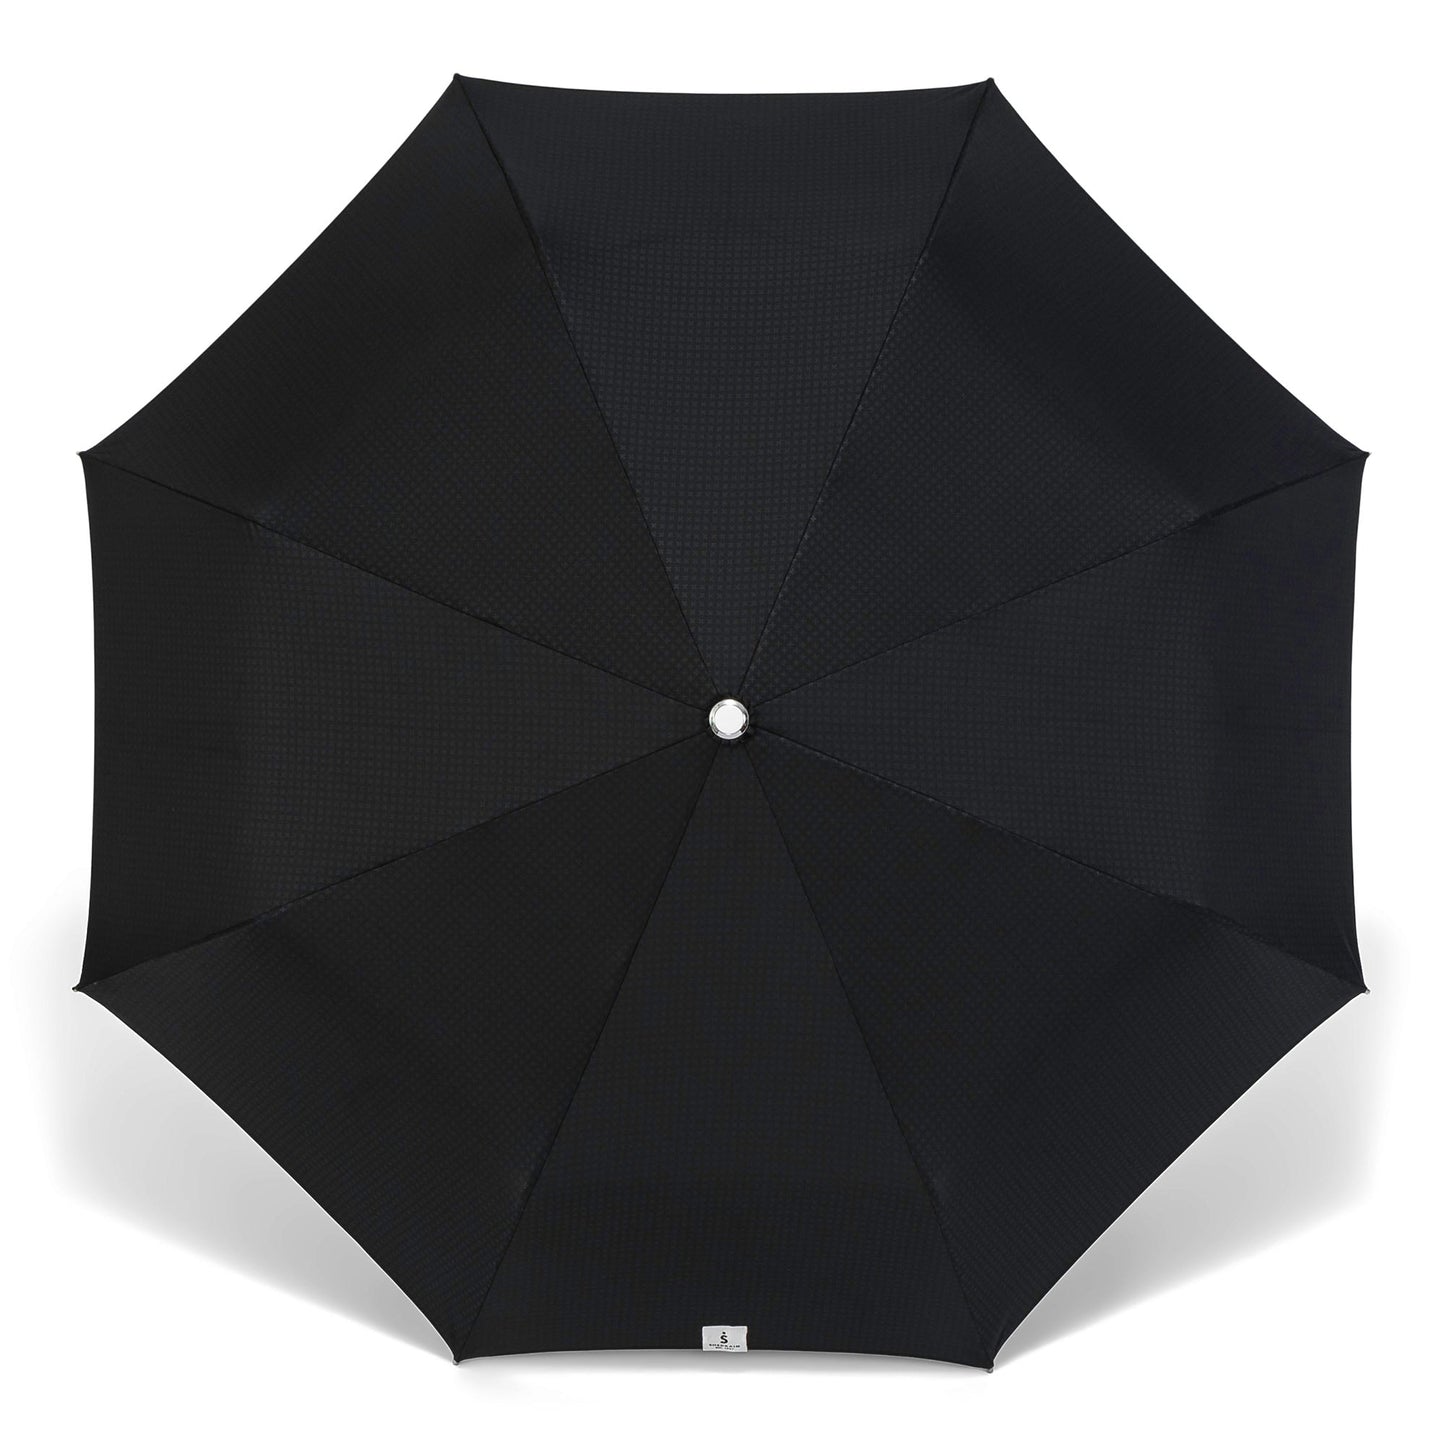 Sleek Black and Silver Compact Umbrella